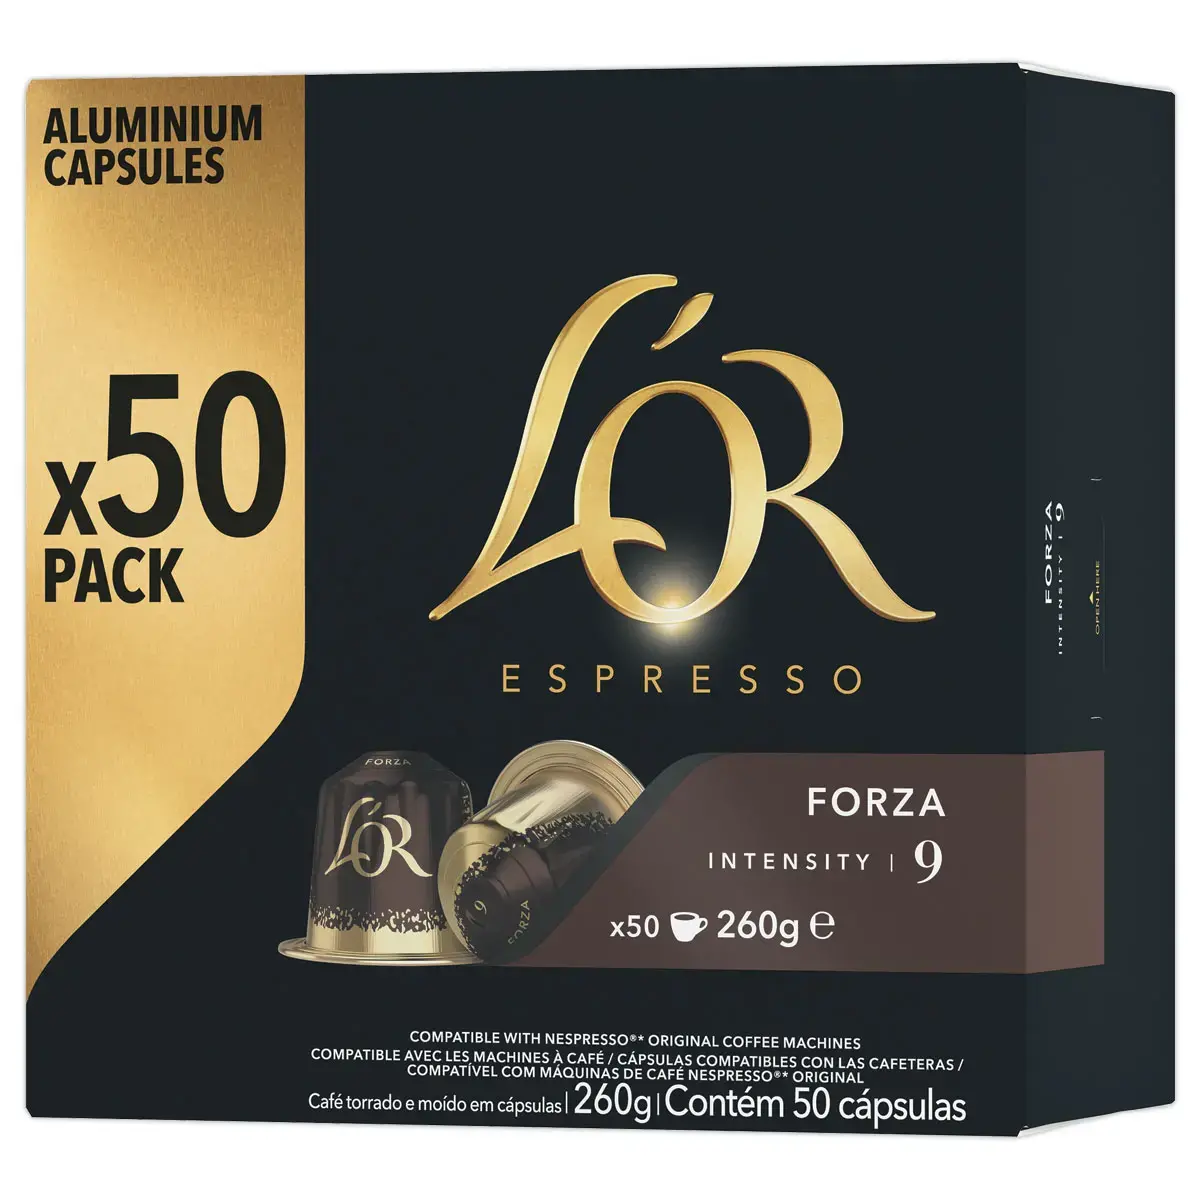 Boite de 50 capsules de café L'OR Espresso Forza photo du produit